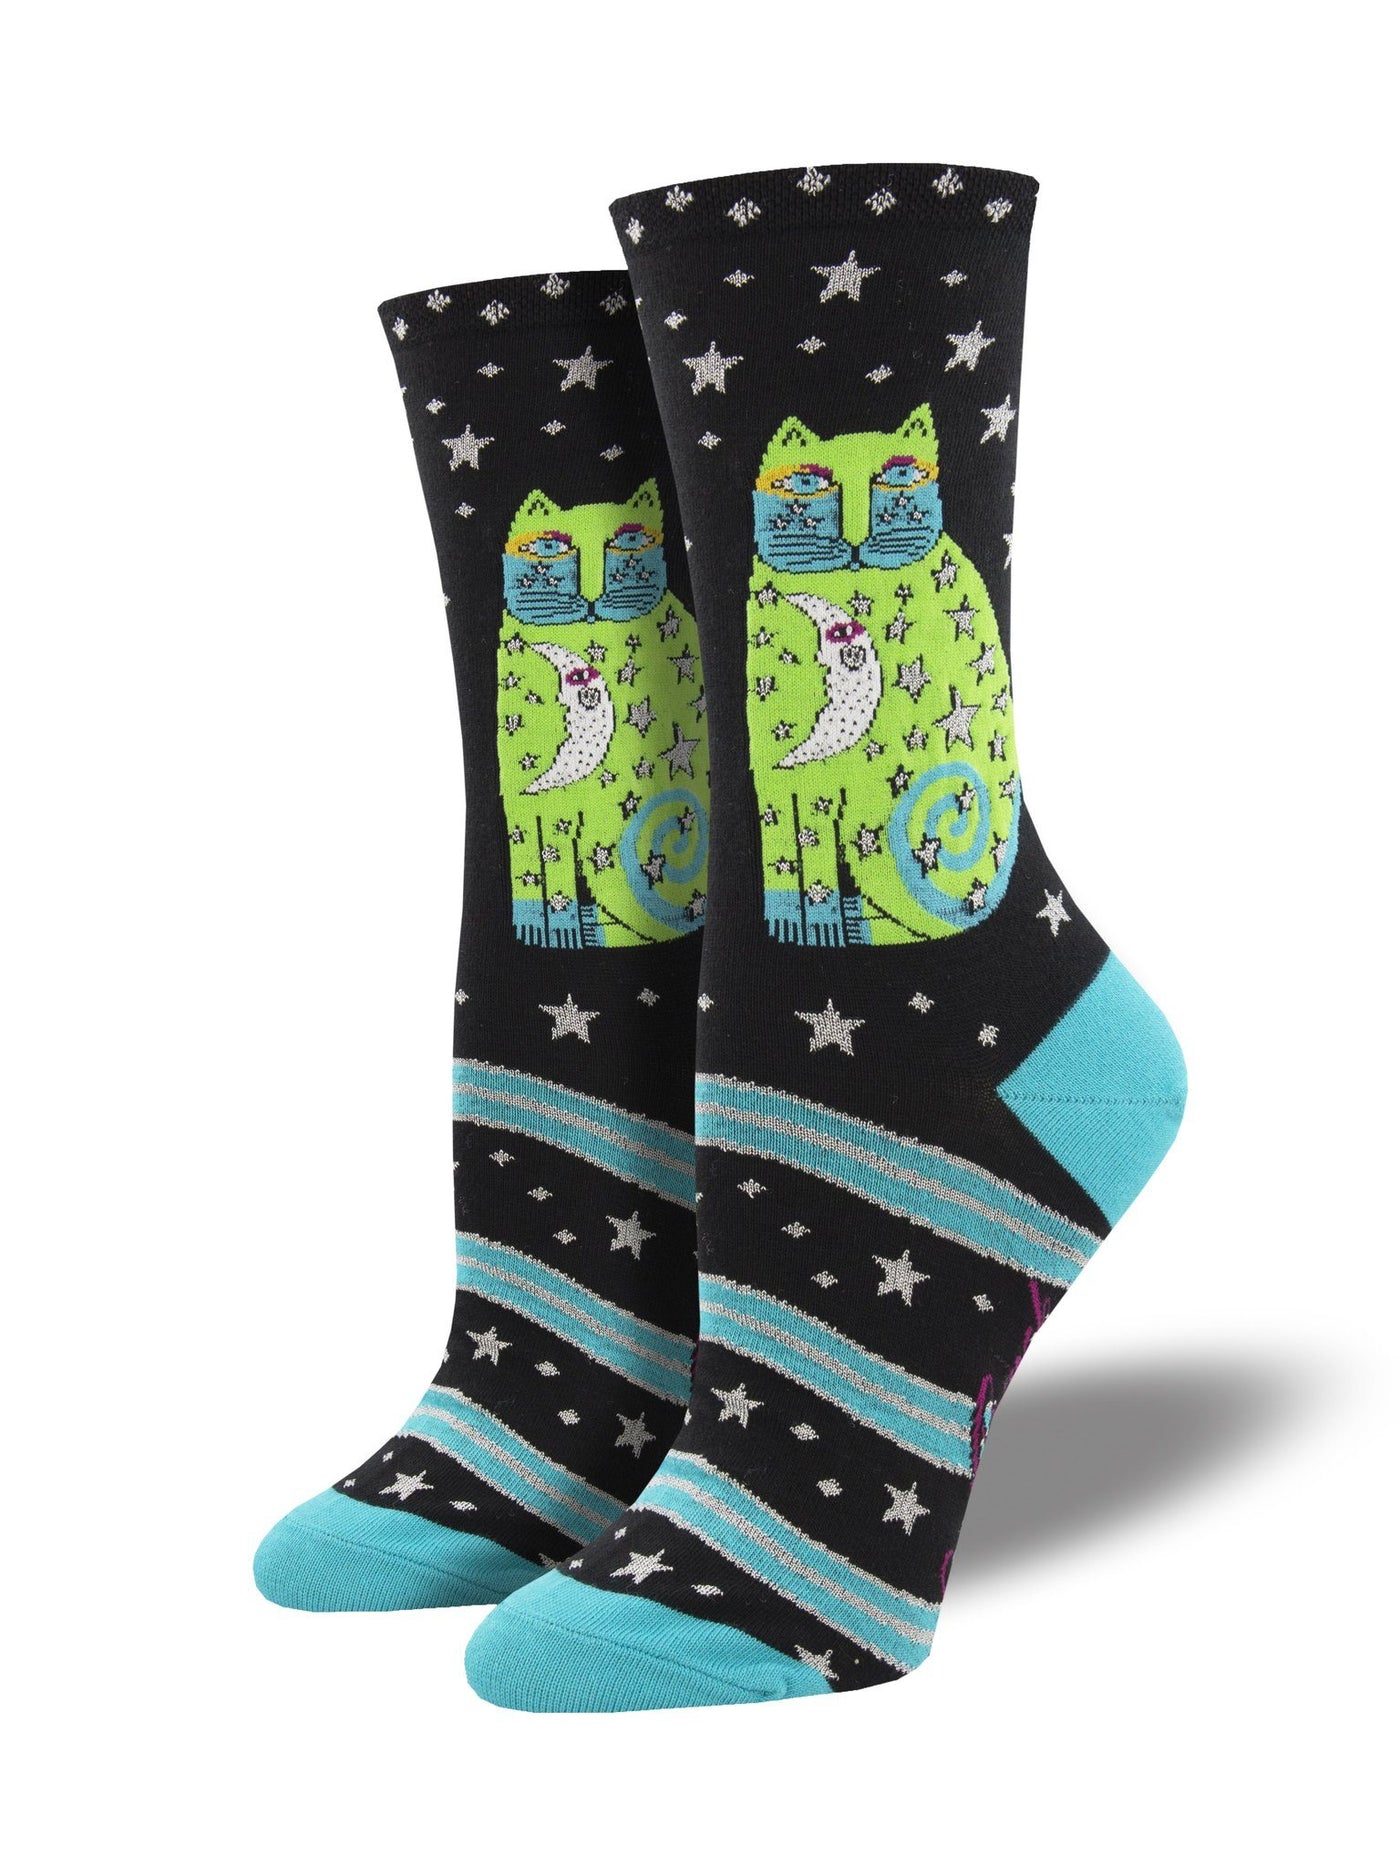 Socksmith - Laurel Burch: Celestial Moon Cat Crew Socks | Women's - Knock Your Socks Off